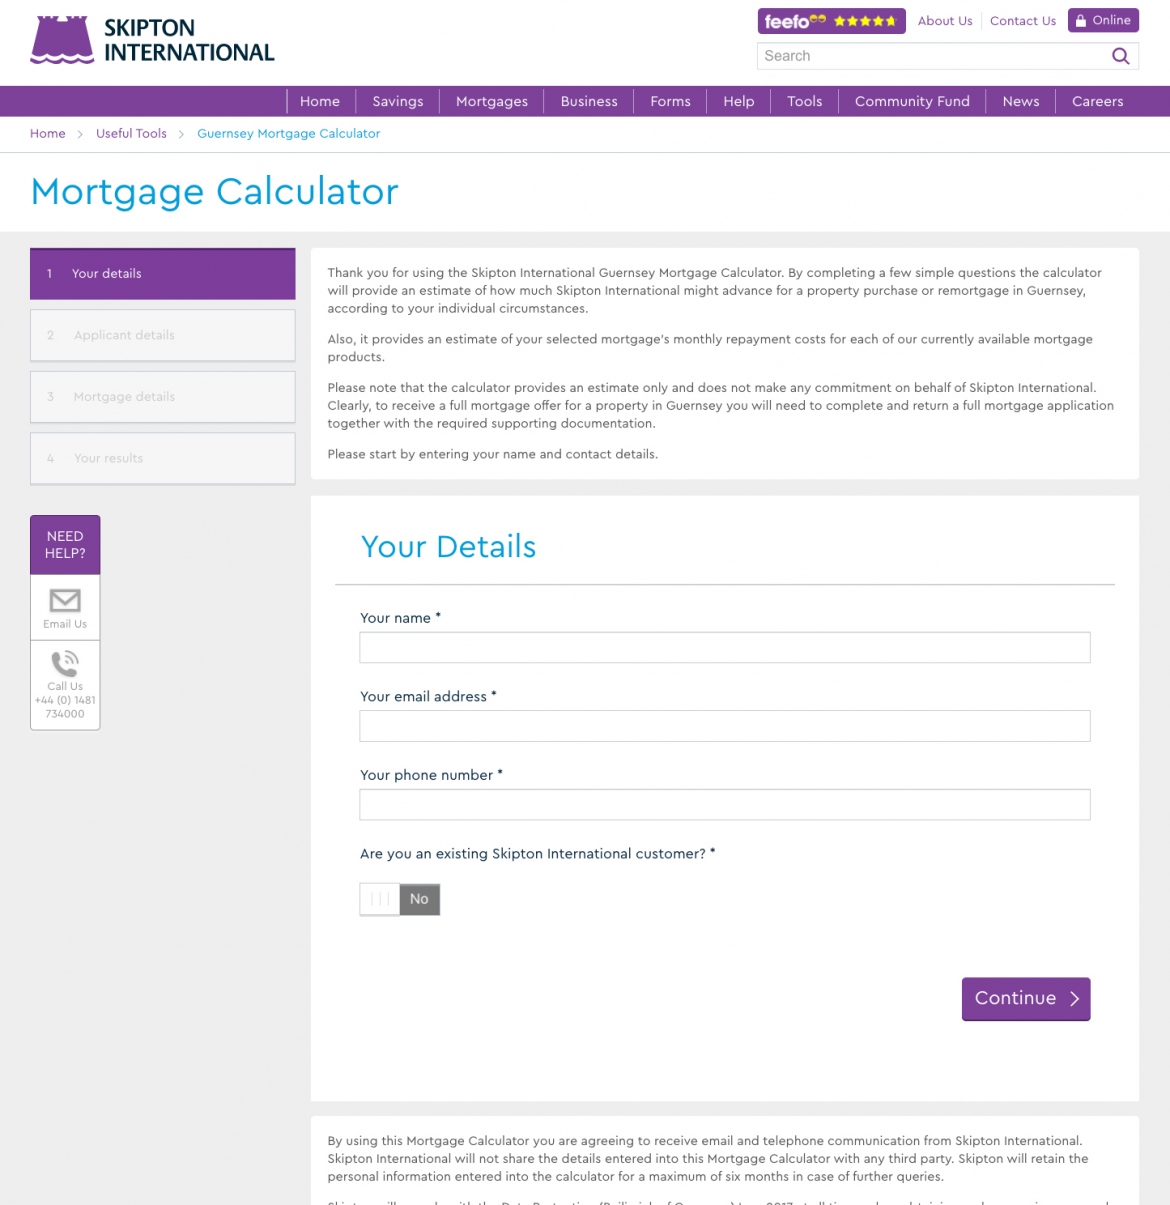 Skipton International website screenshot of the mortgage calculator